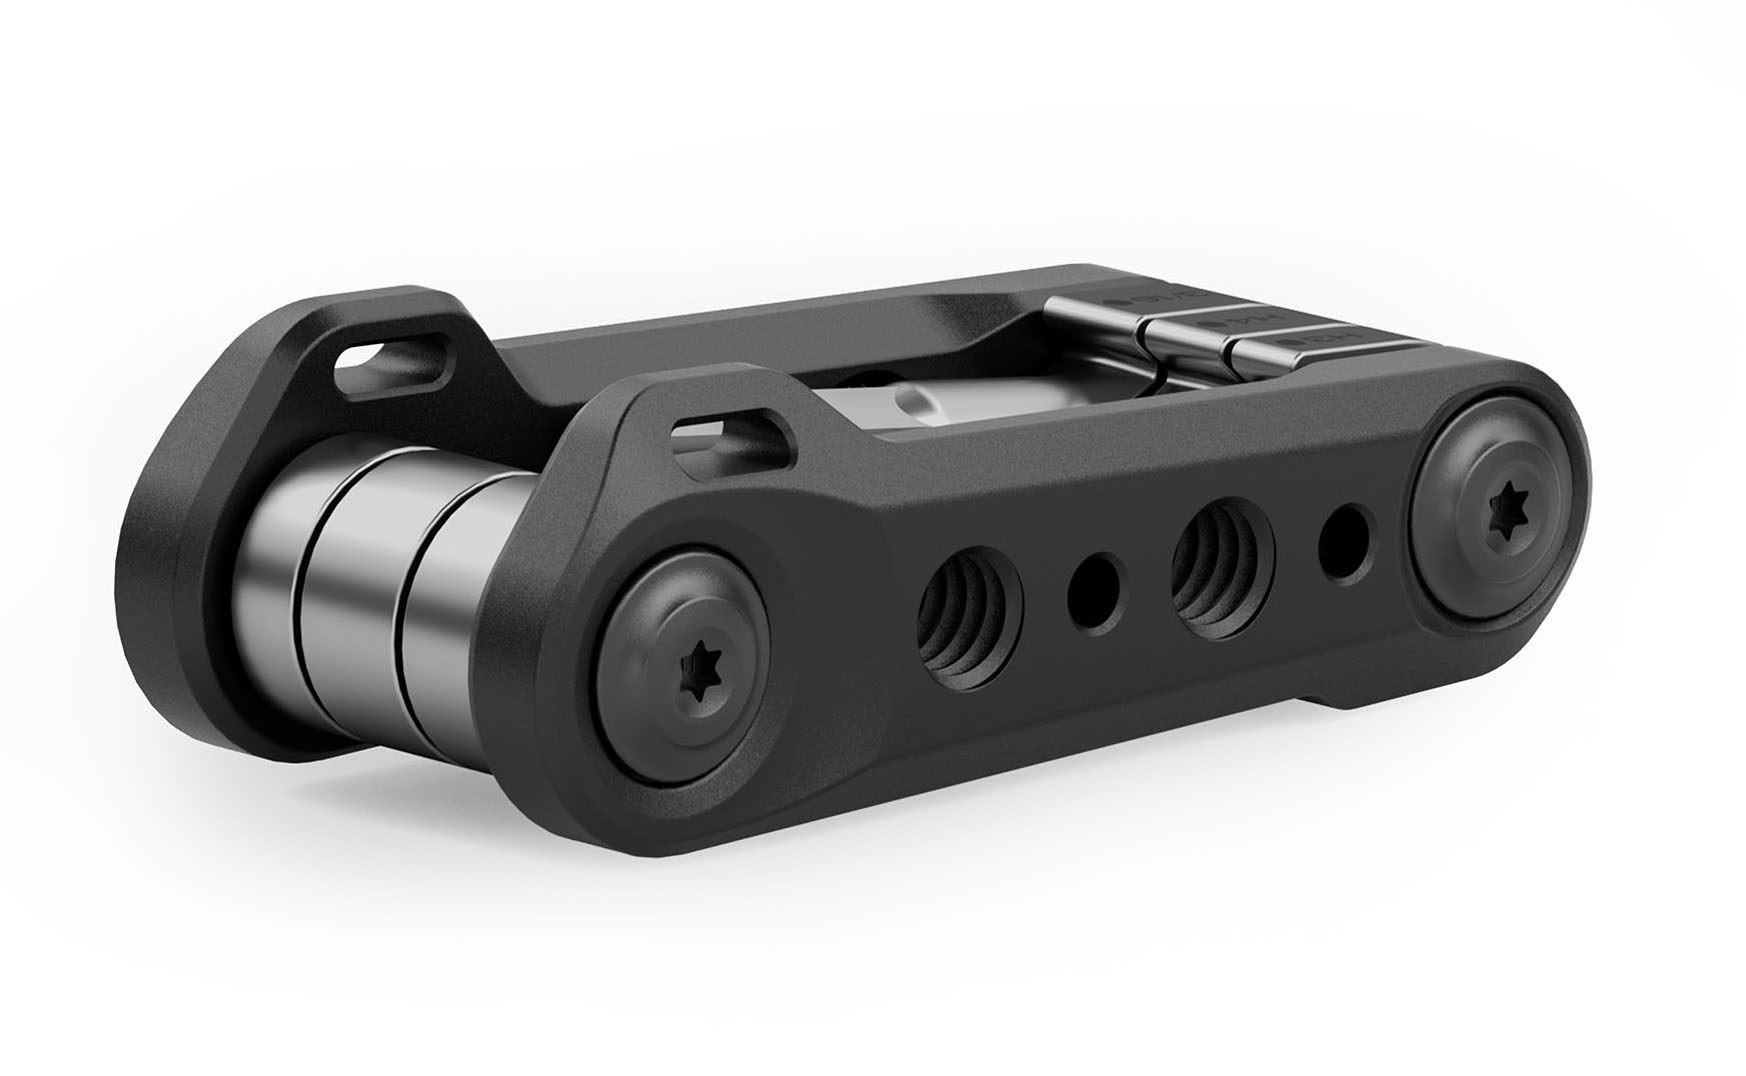 Tilta Multi-Functional Mini Tool Kit ชุดไขควงสำหรับอุปกรณ์กล้อง 6 แบบ ราคา 1250 บาท